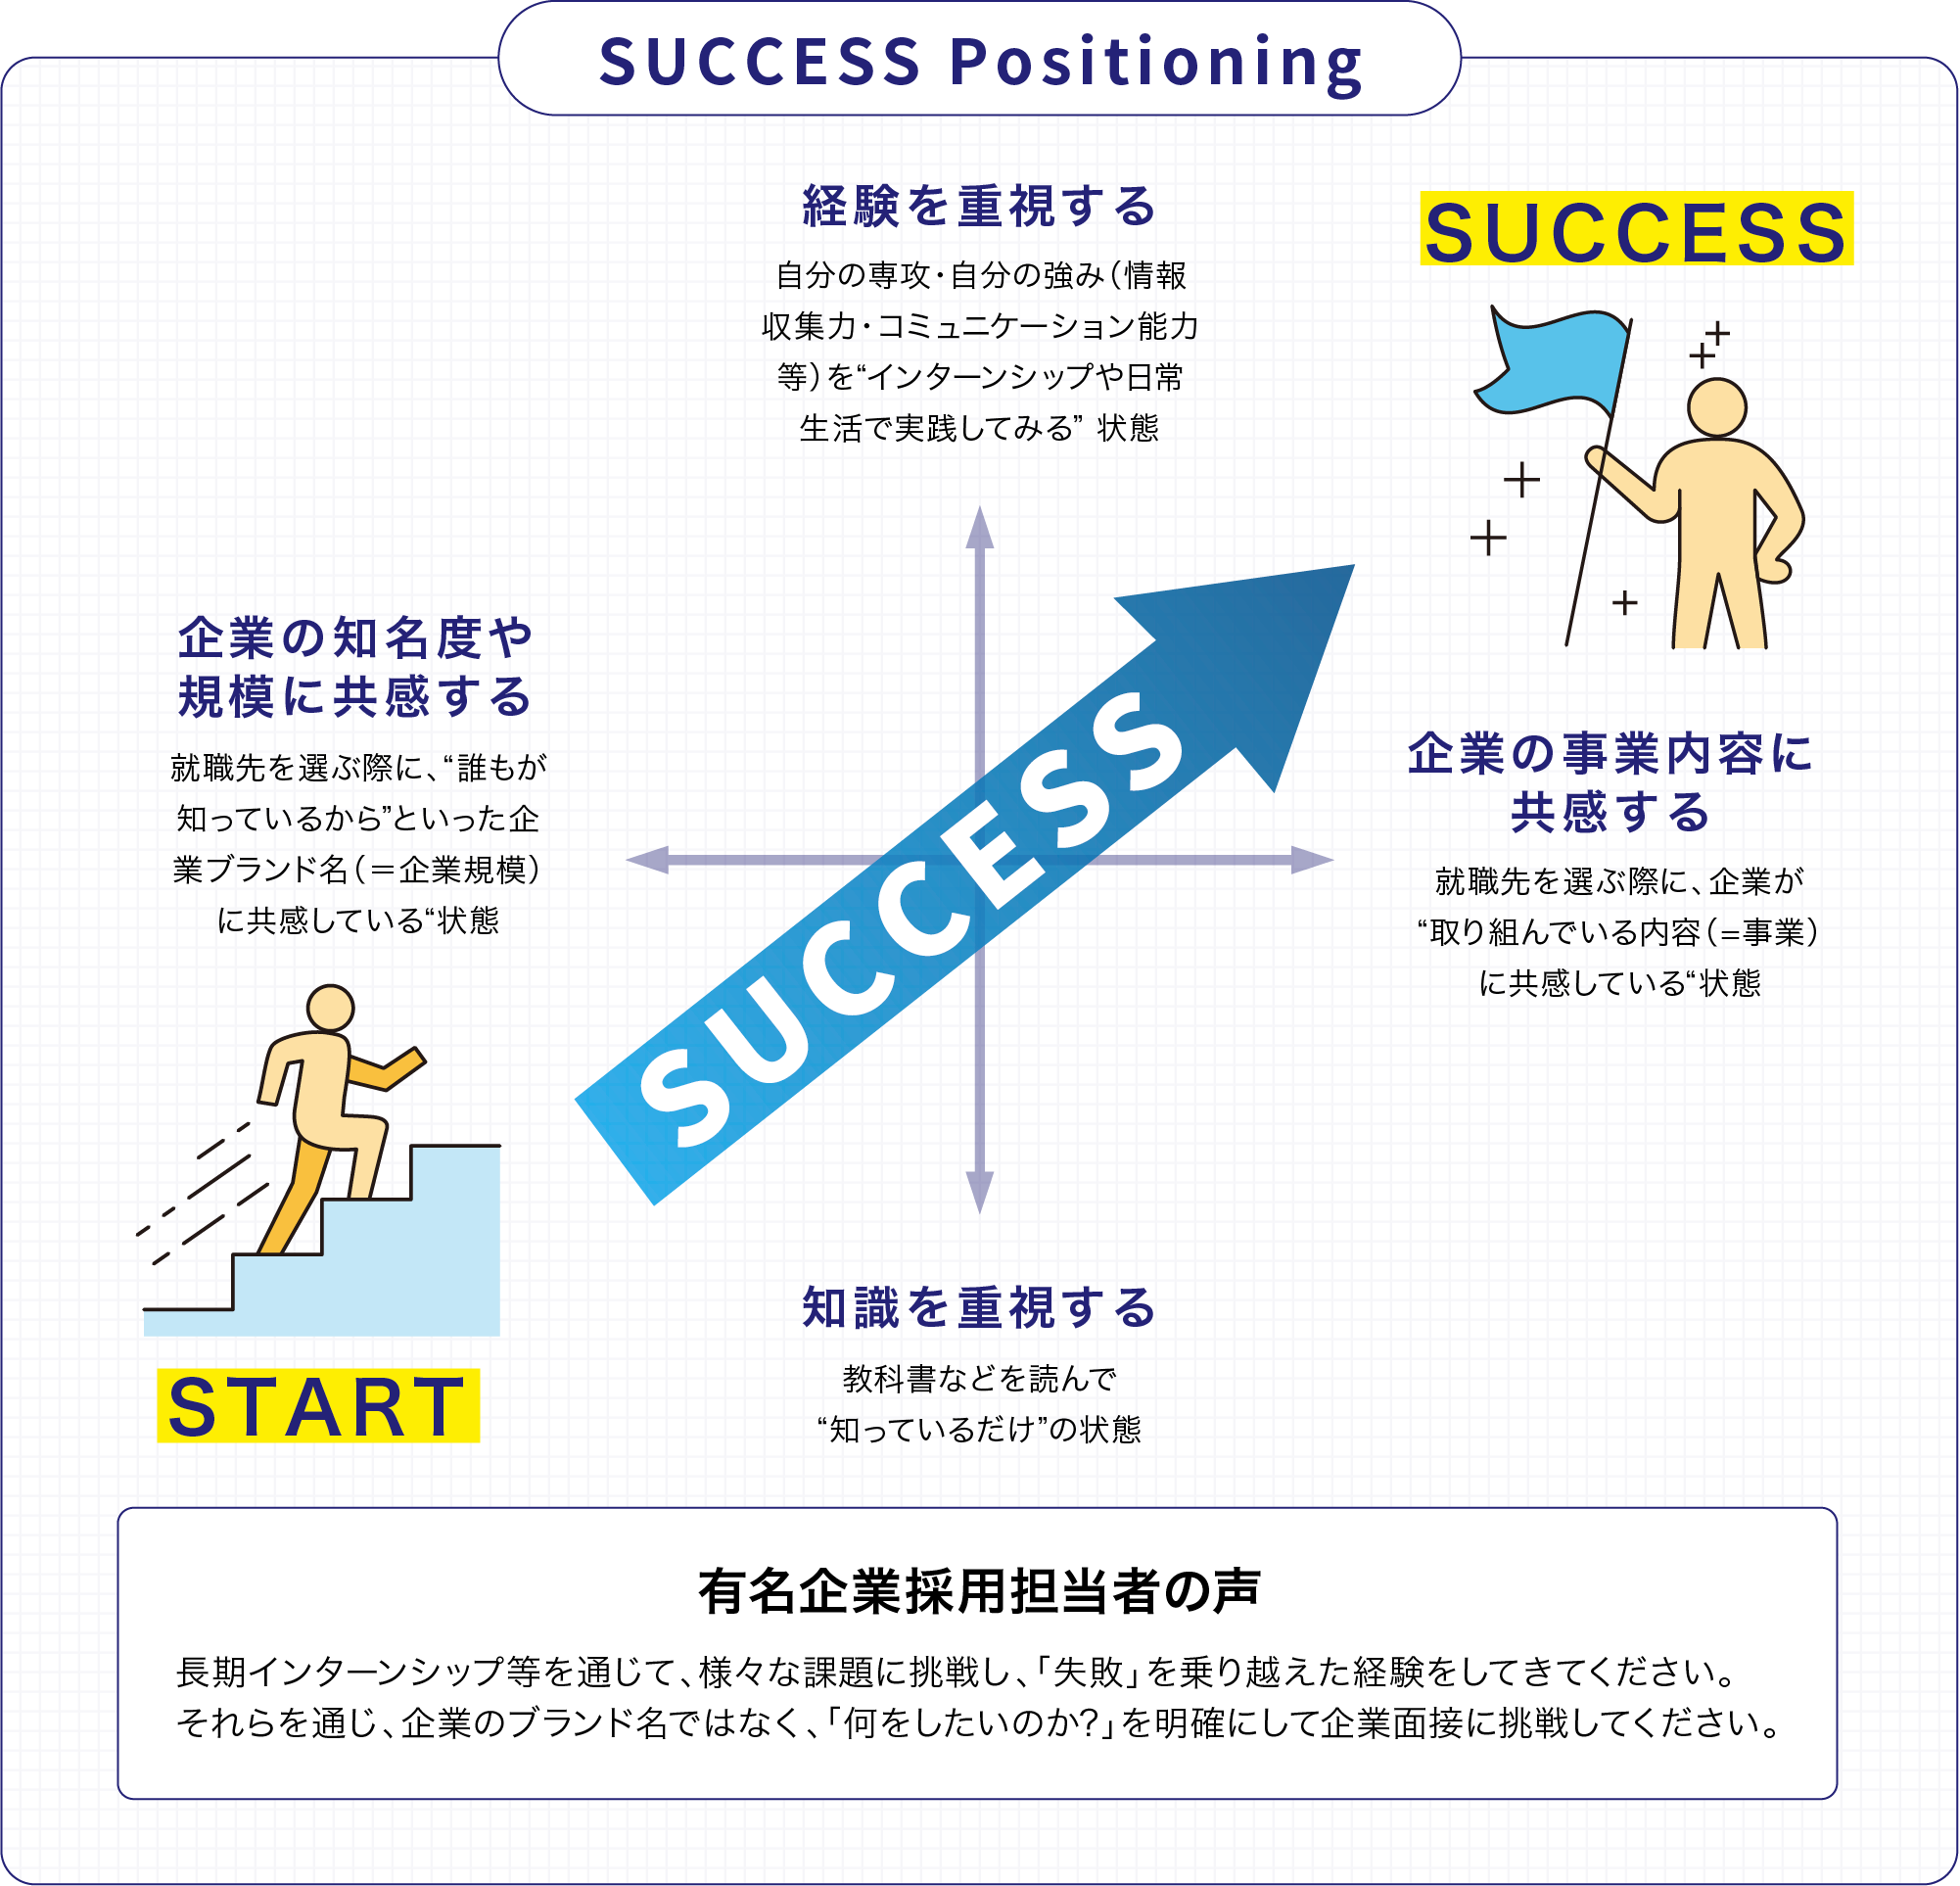 SUCCESS Positioning